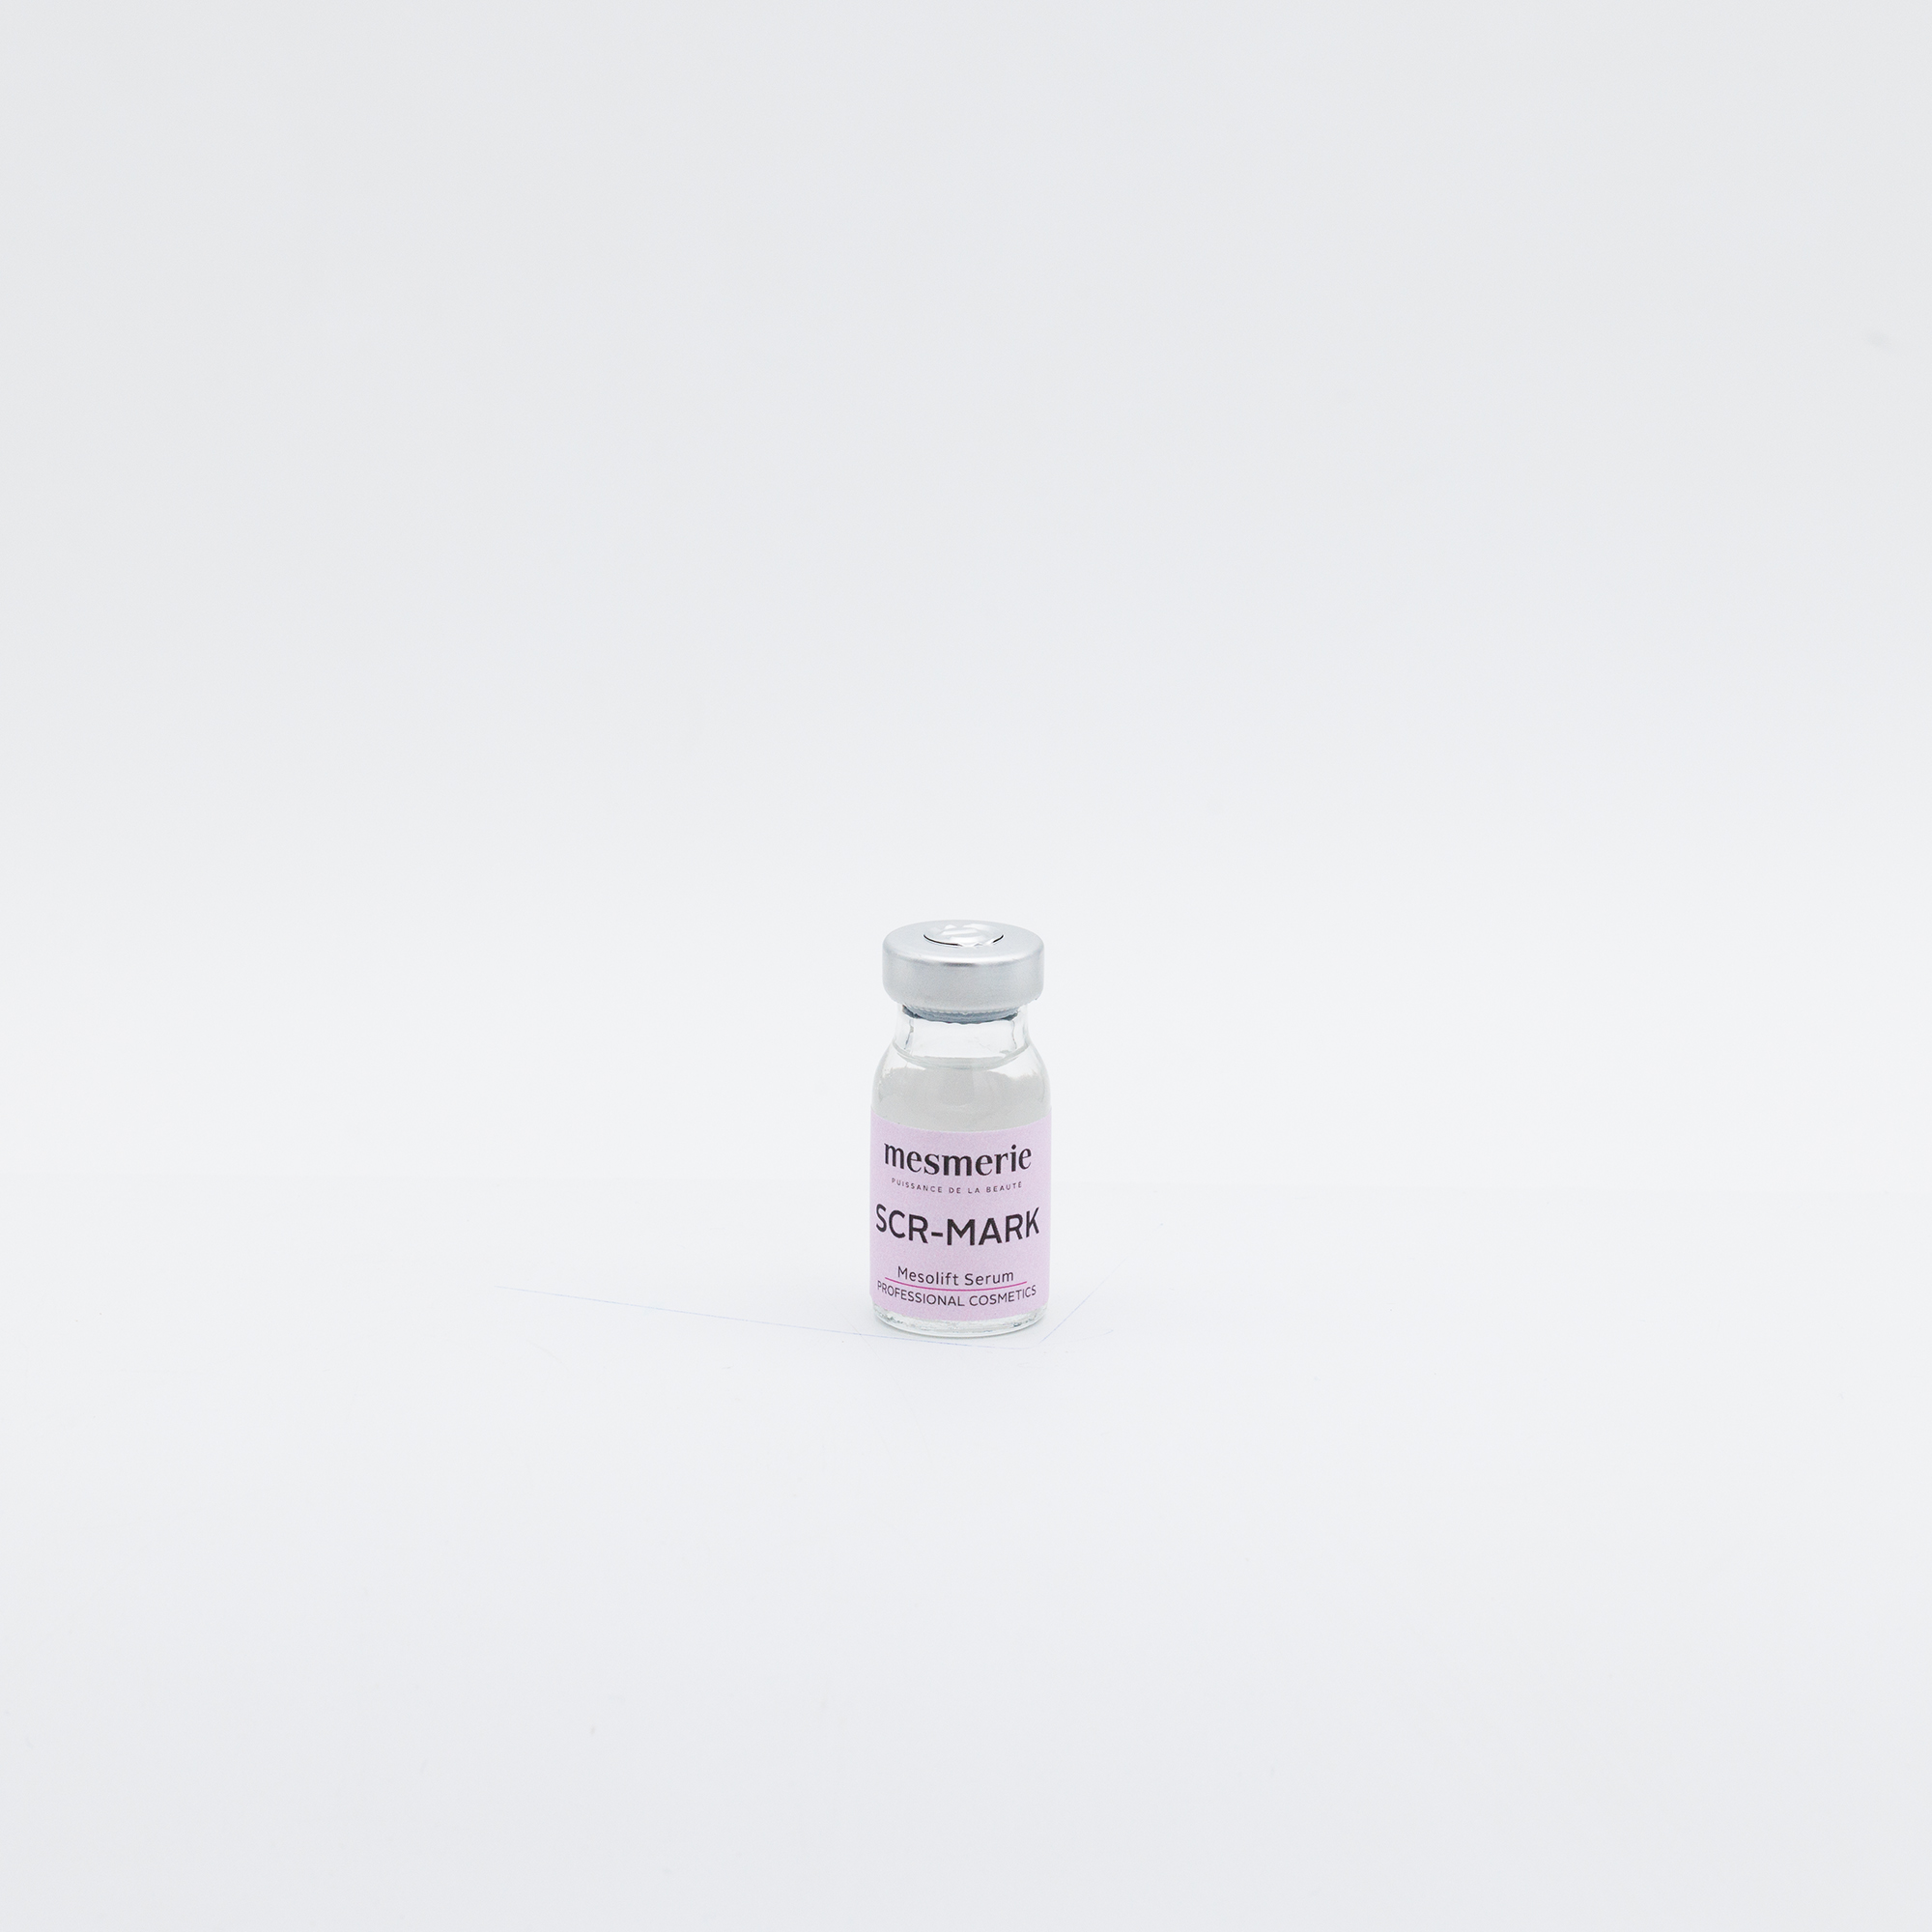 SCR MARK ampula serum zaglađuje ožiljke, regeneriše 8ml